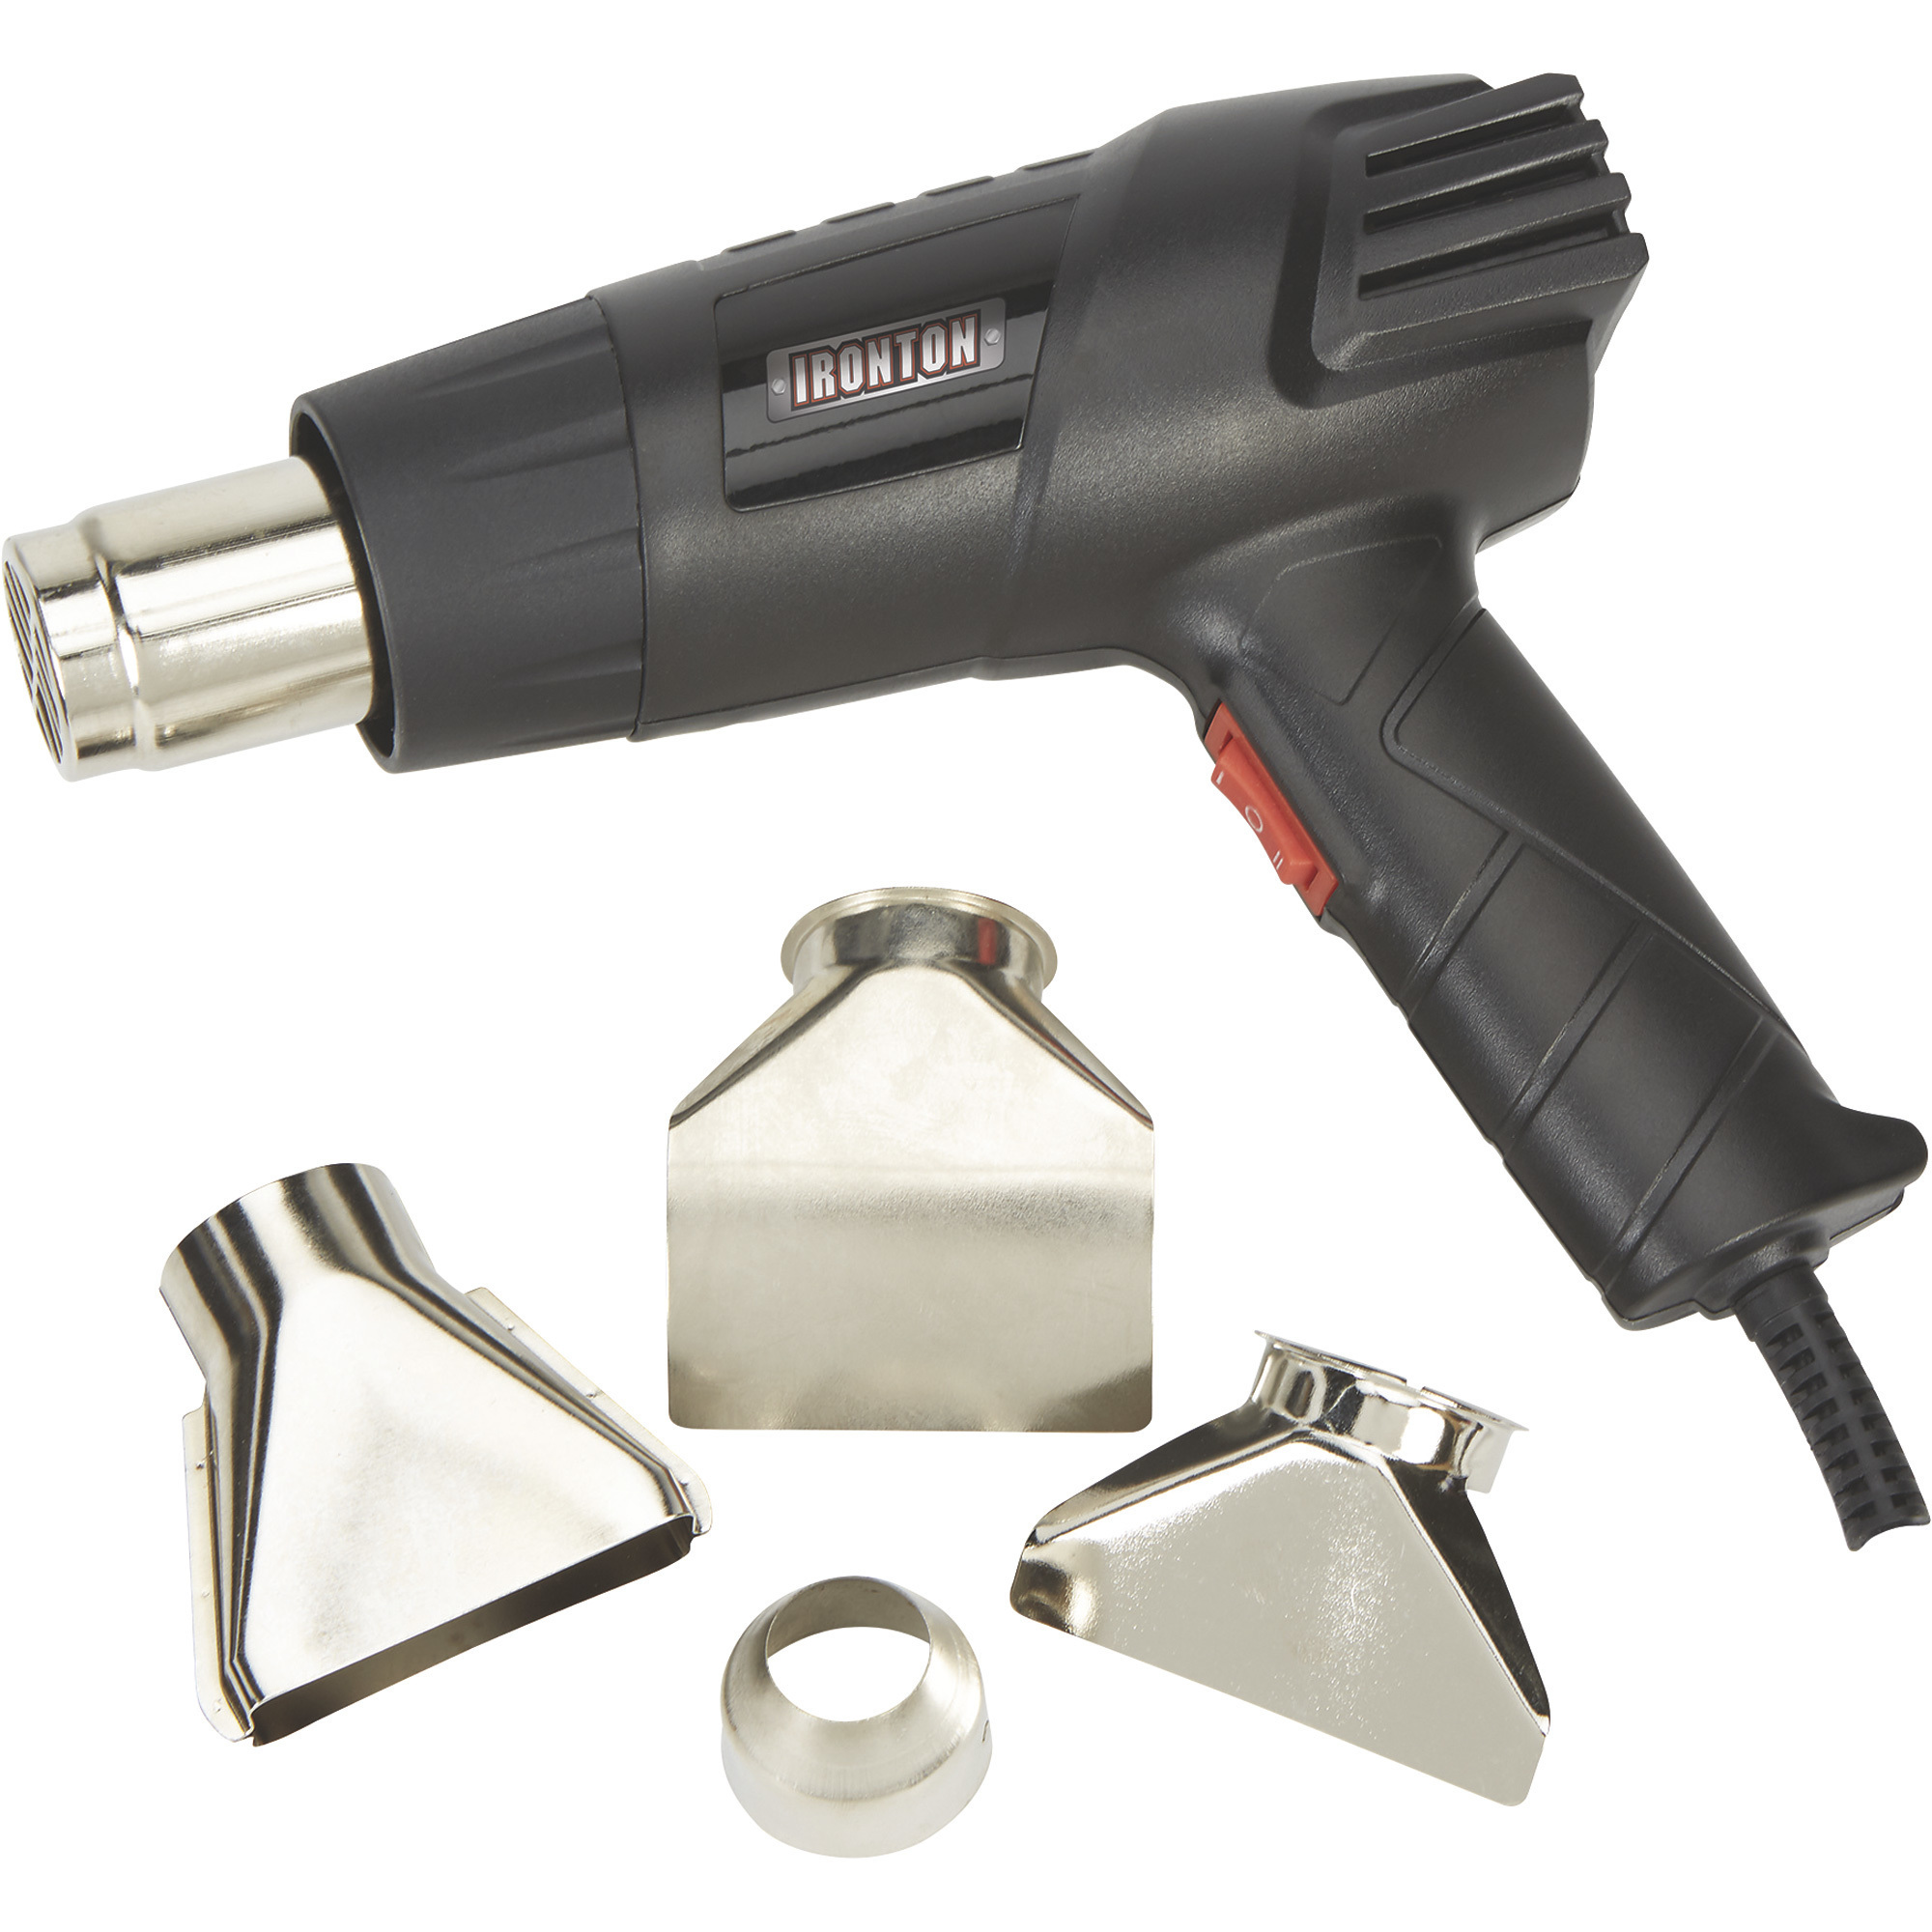 Milwaukee Dual Temperature Heat Gun Review 8975-6 - Pro Tool Reviews